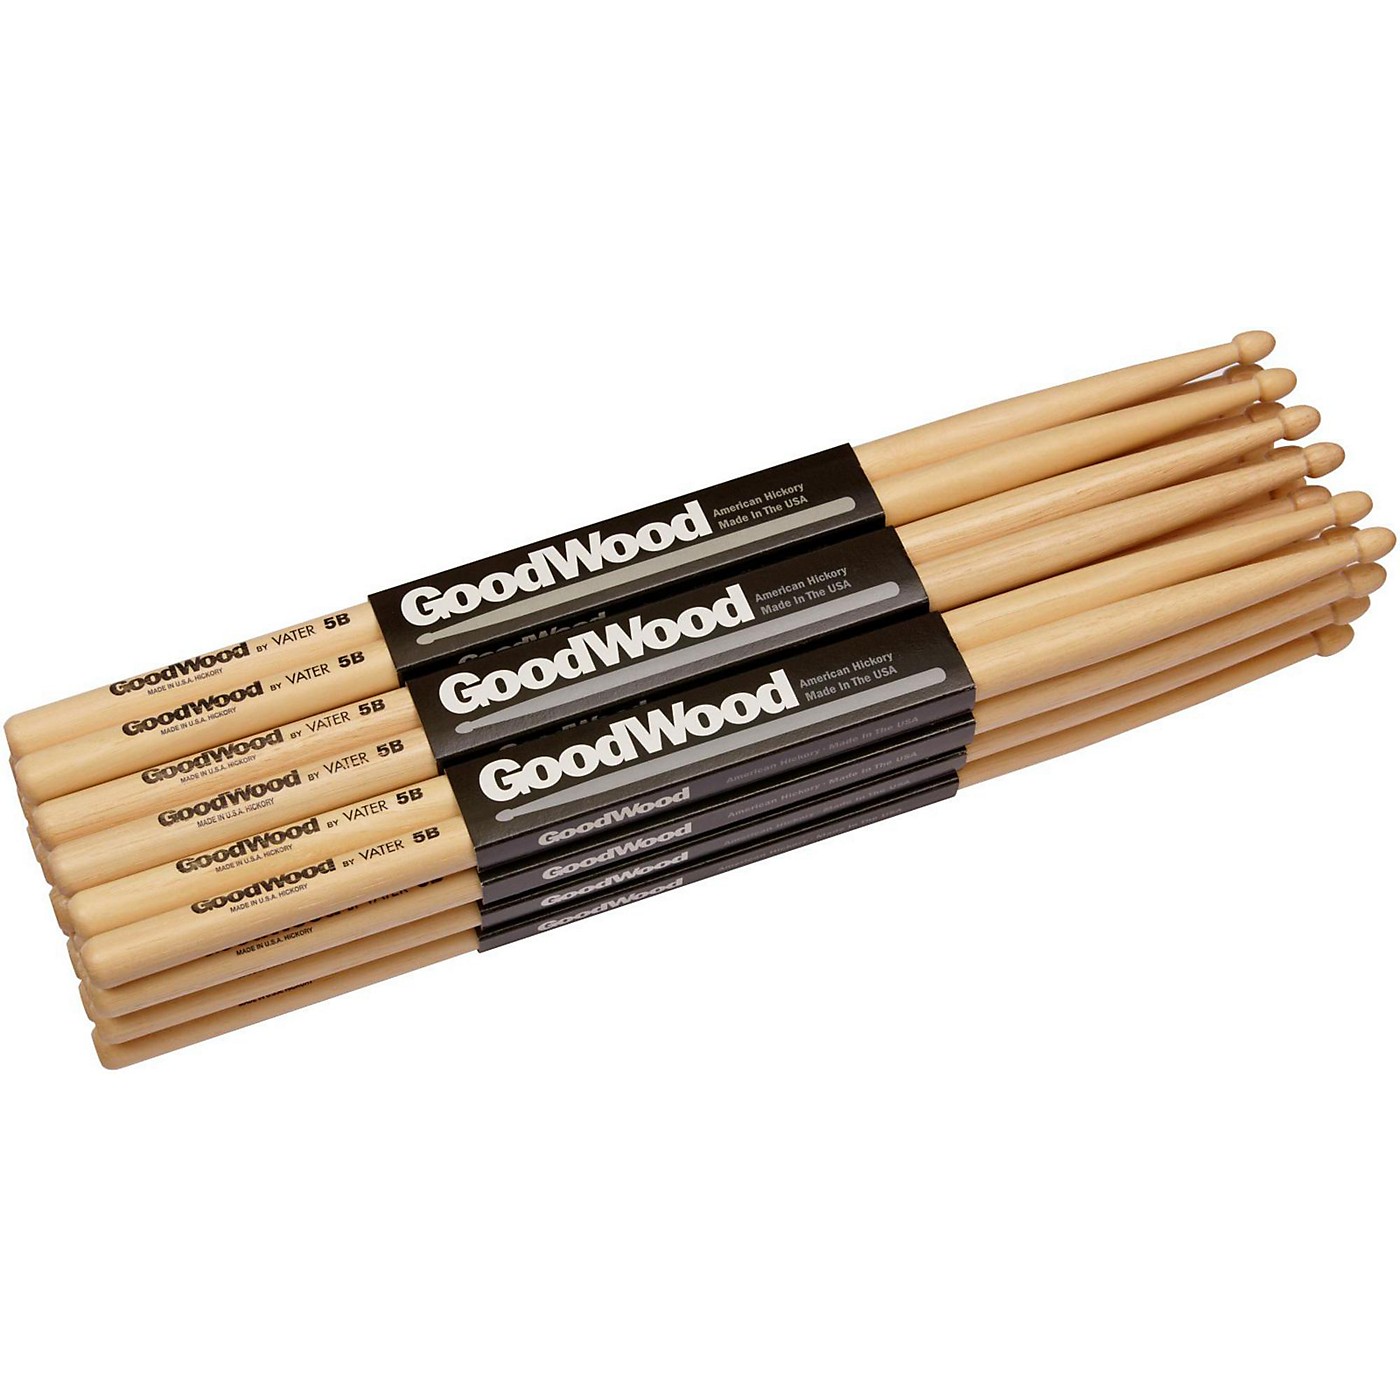 Goodwood 12-Pack Drum Sticks thumbnail